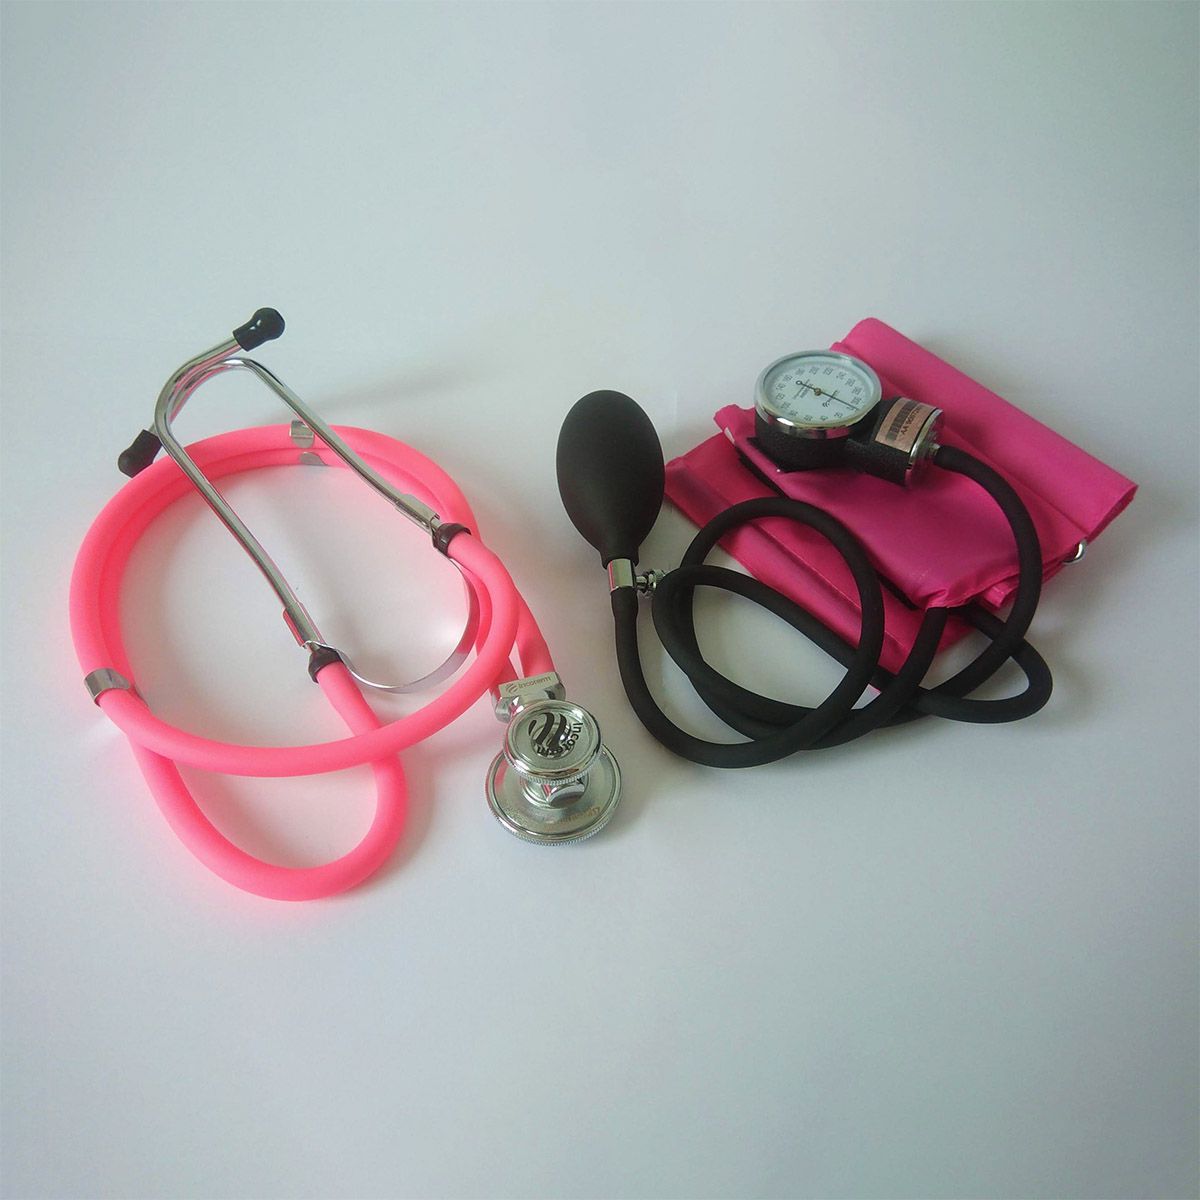 Estetoscopio e esfigmomanometro Pink